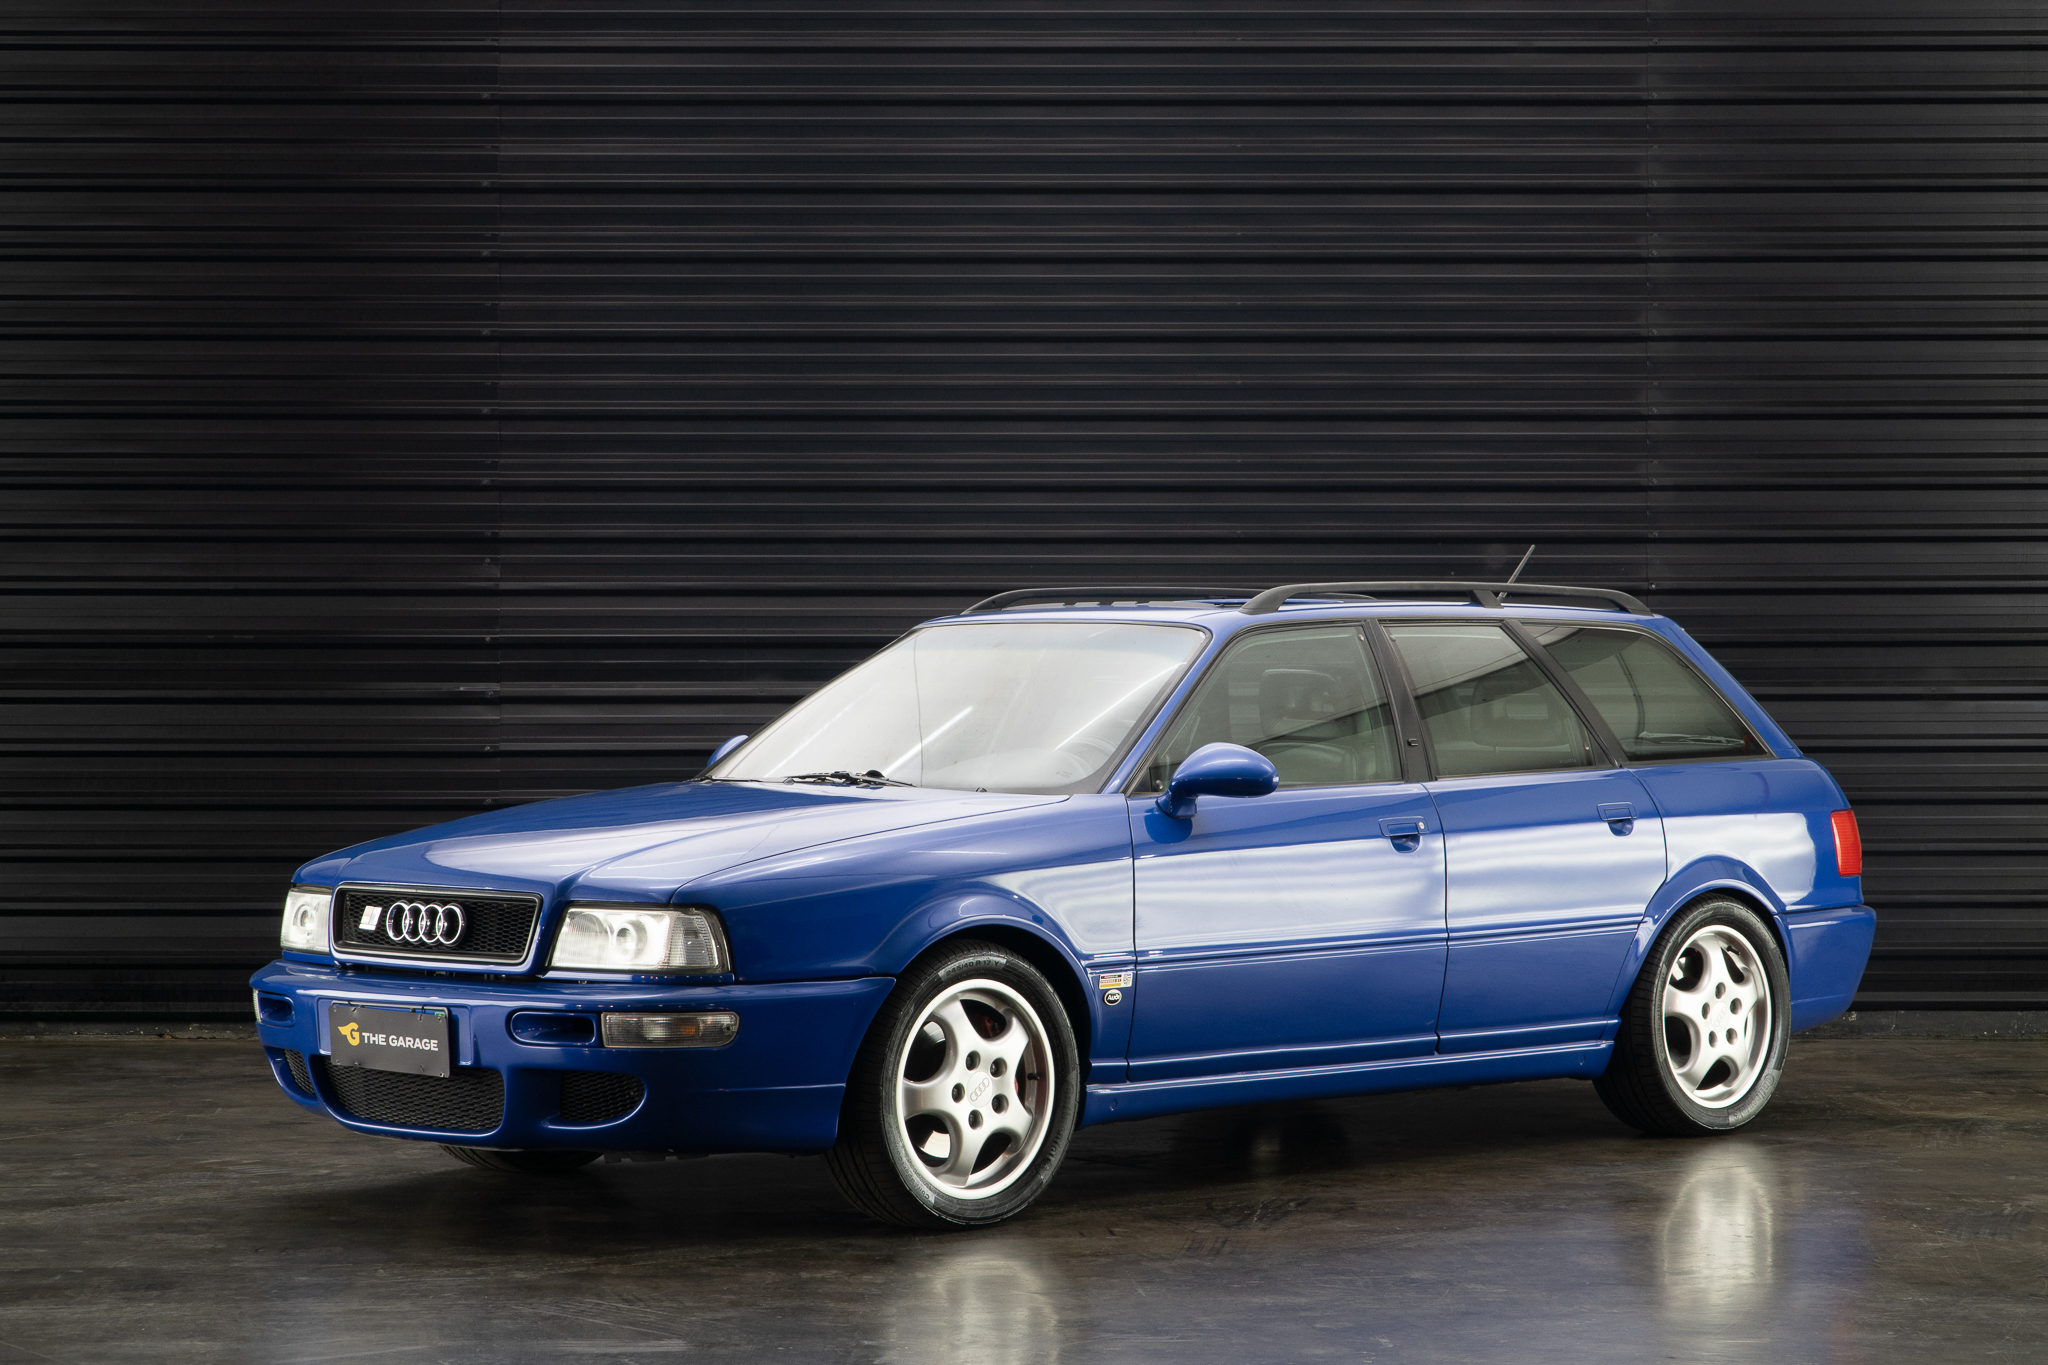 1995 Audi RS2 a venda for sale the garage